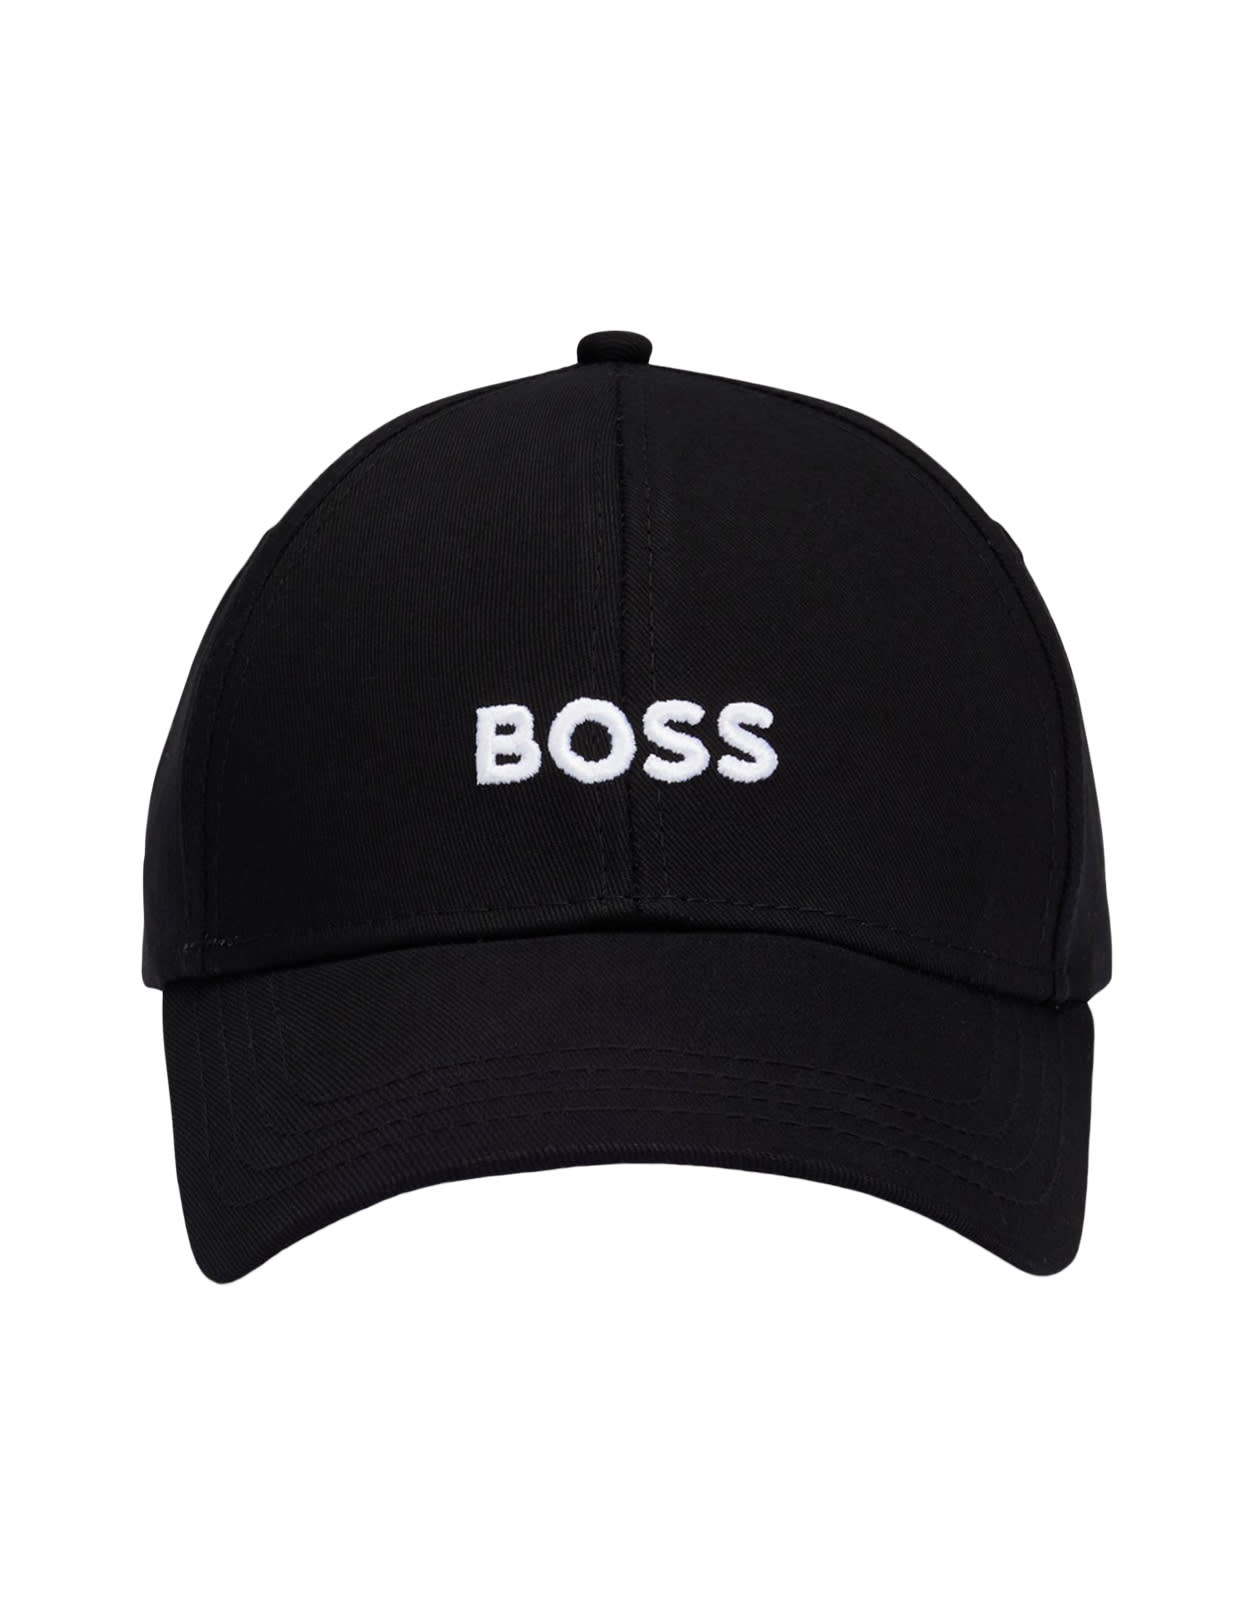 HUGO BOSS BLACK COTTON TWILL BASEBALL CAP WITH EMBROIDERED LOGO